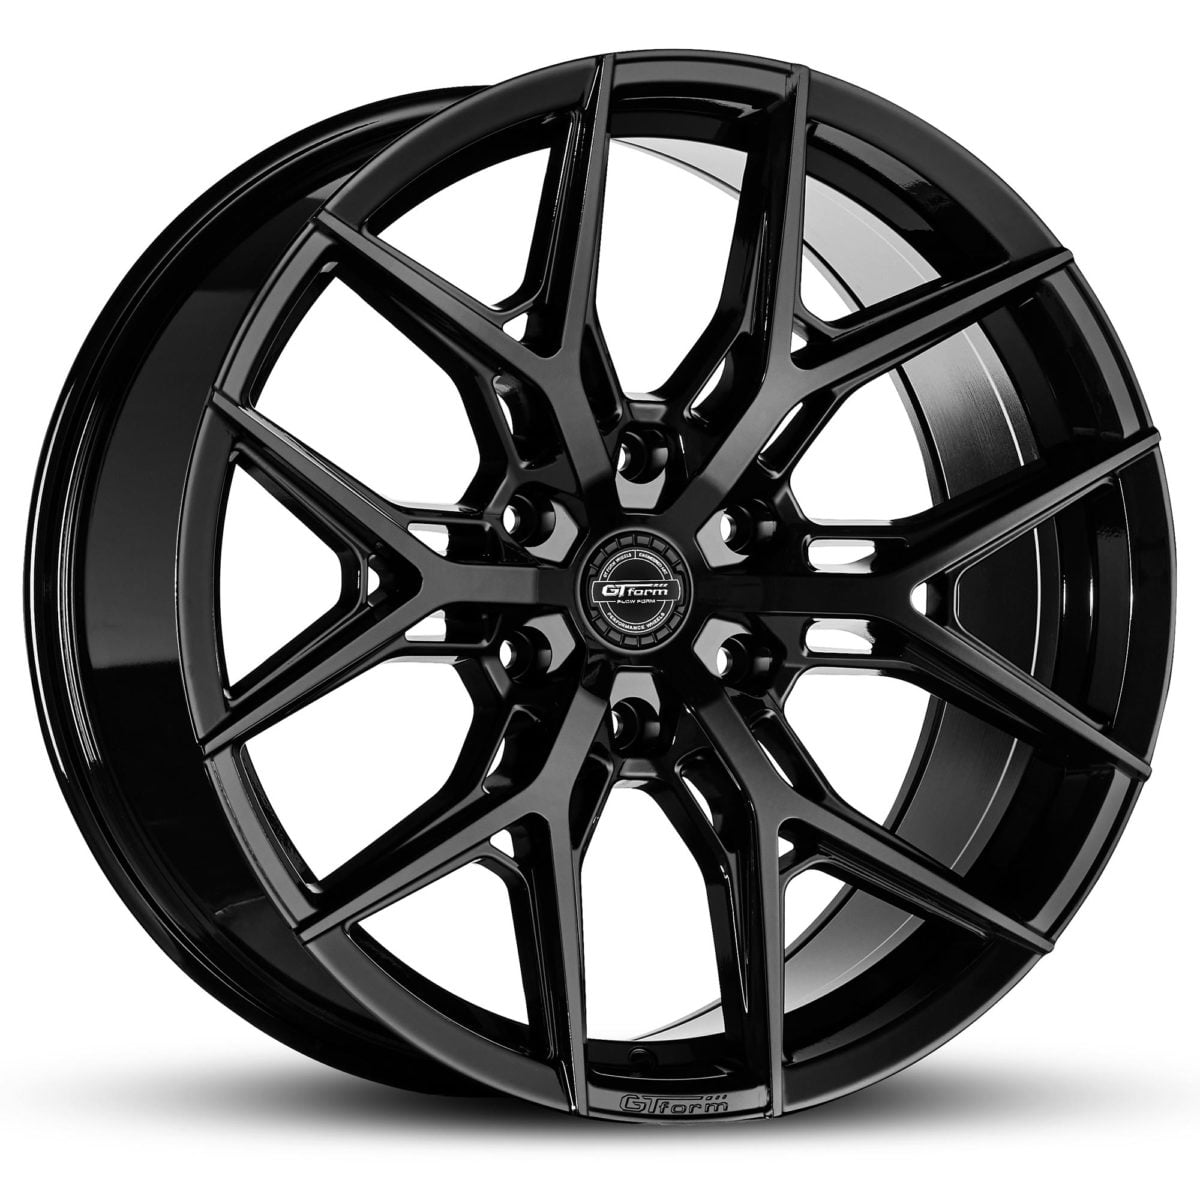 GT Form GF-S1 Gloss Black Wheels 6x114.3 Rims For Nissan Navara NP300 And Mercedes X-Class 20 inch